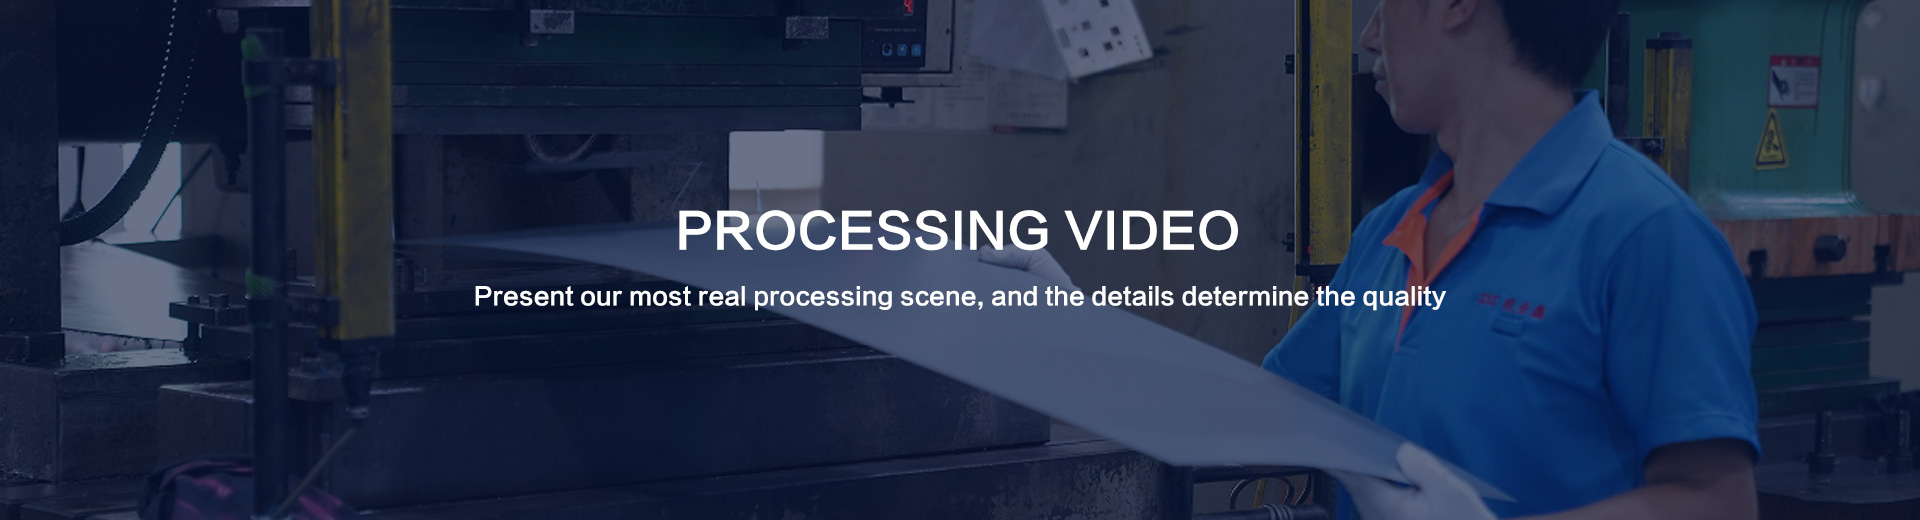 Processing video